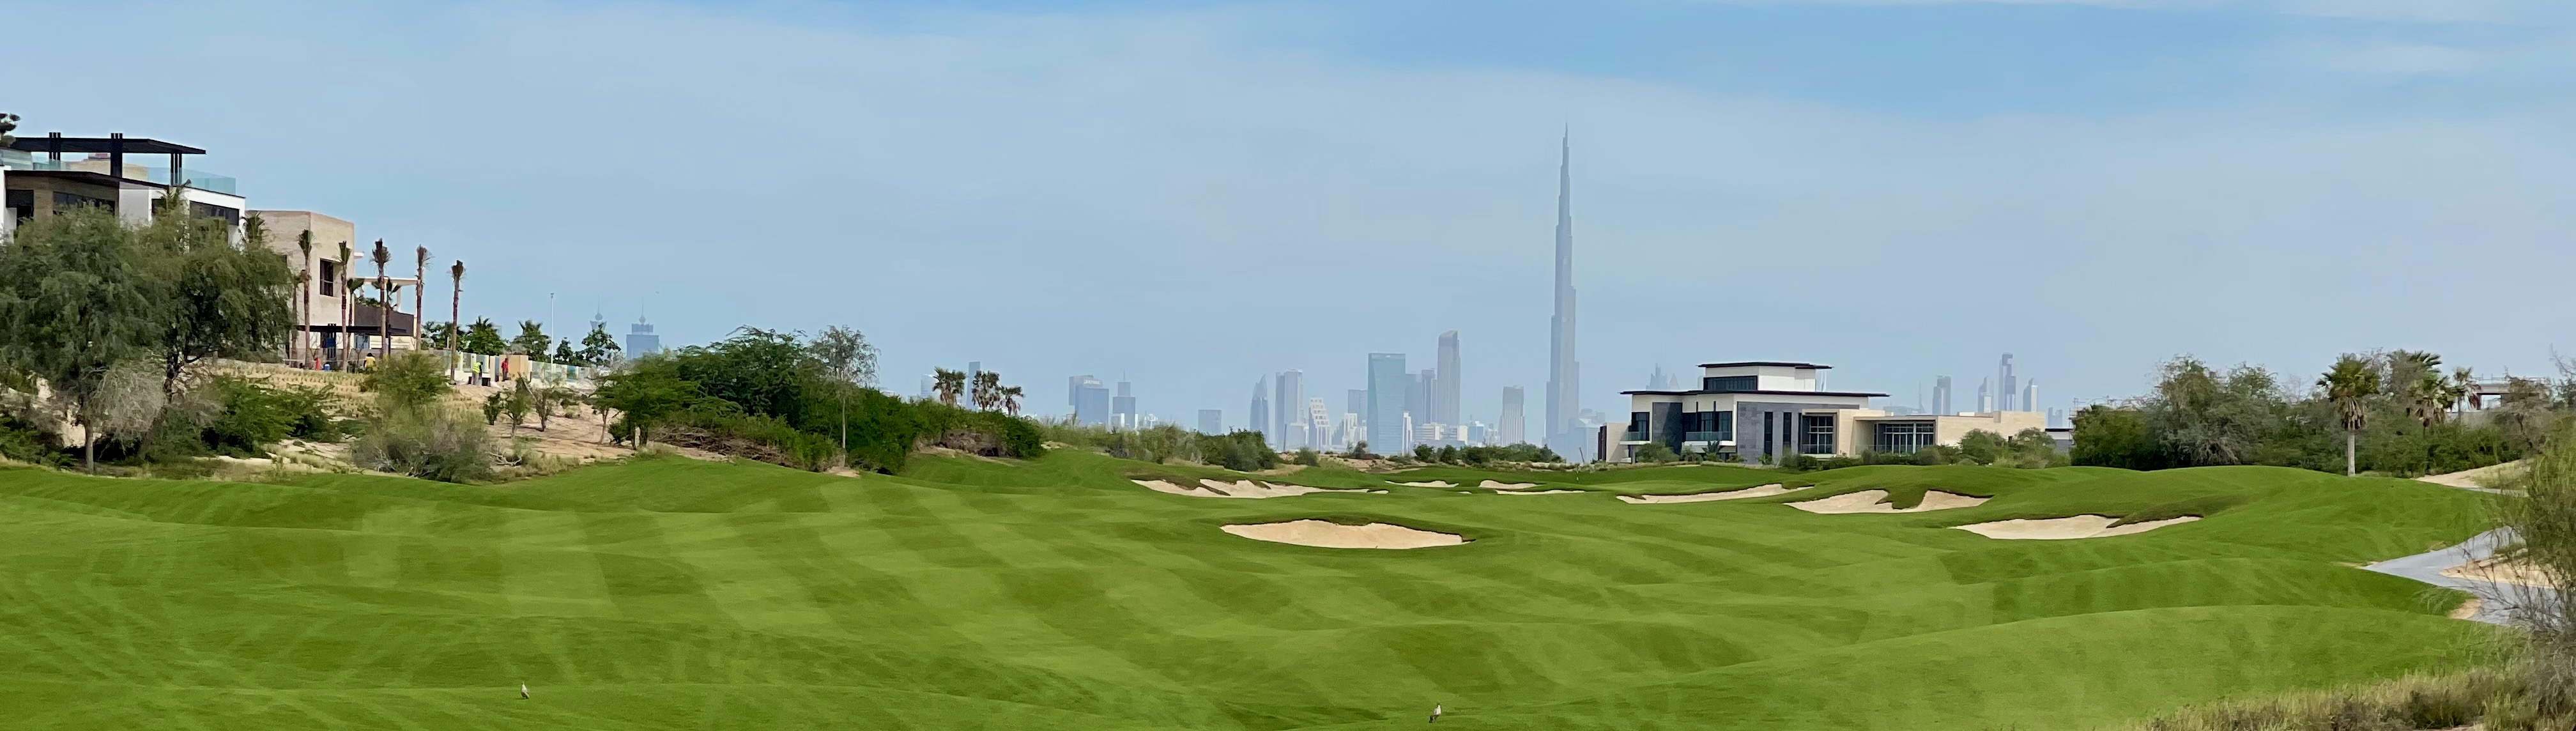 Dubai Hills GC- hole 5 approach